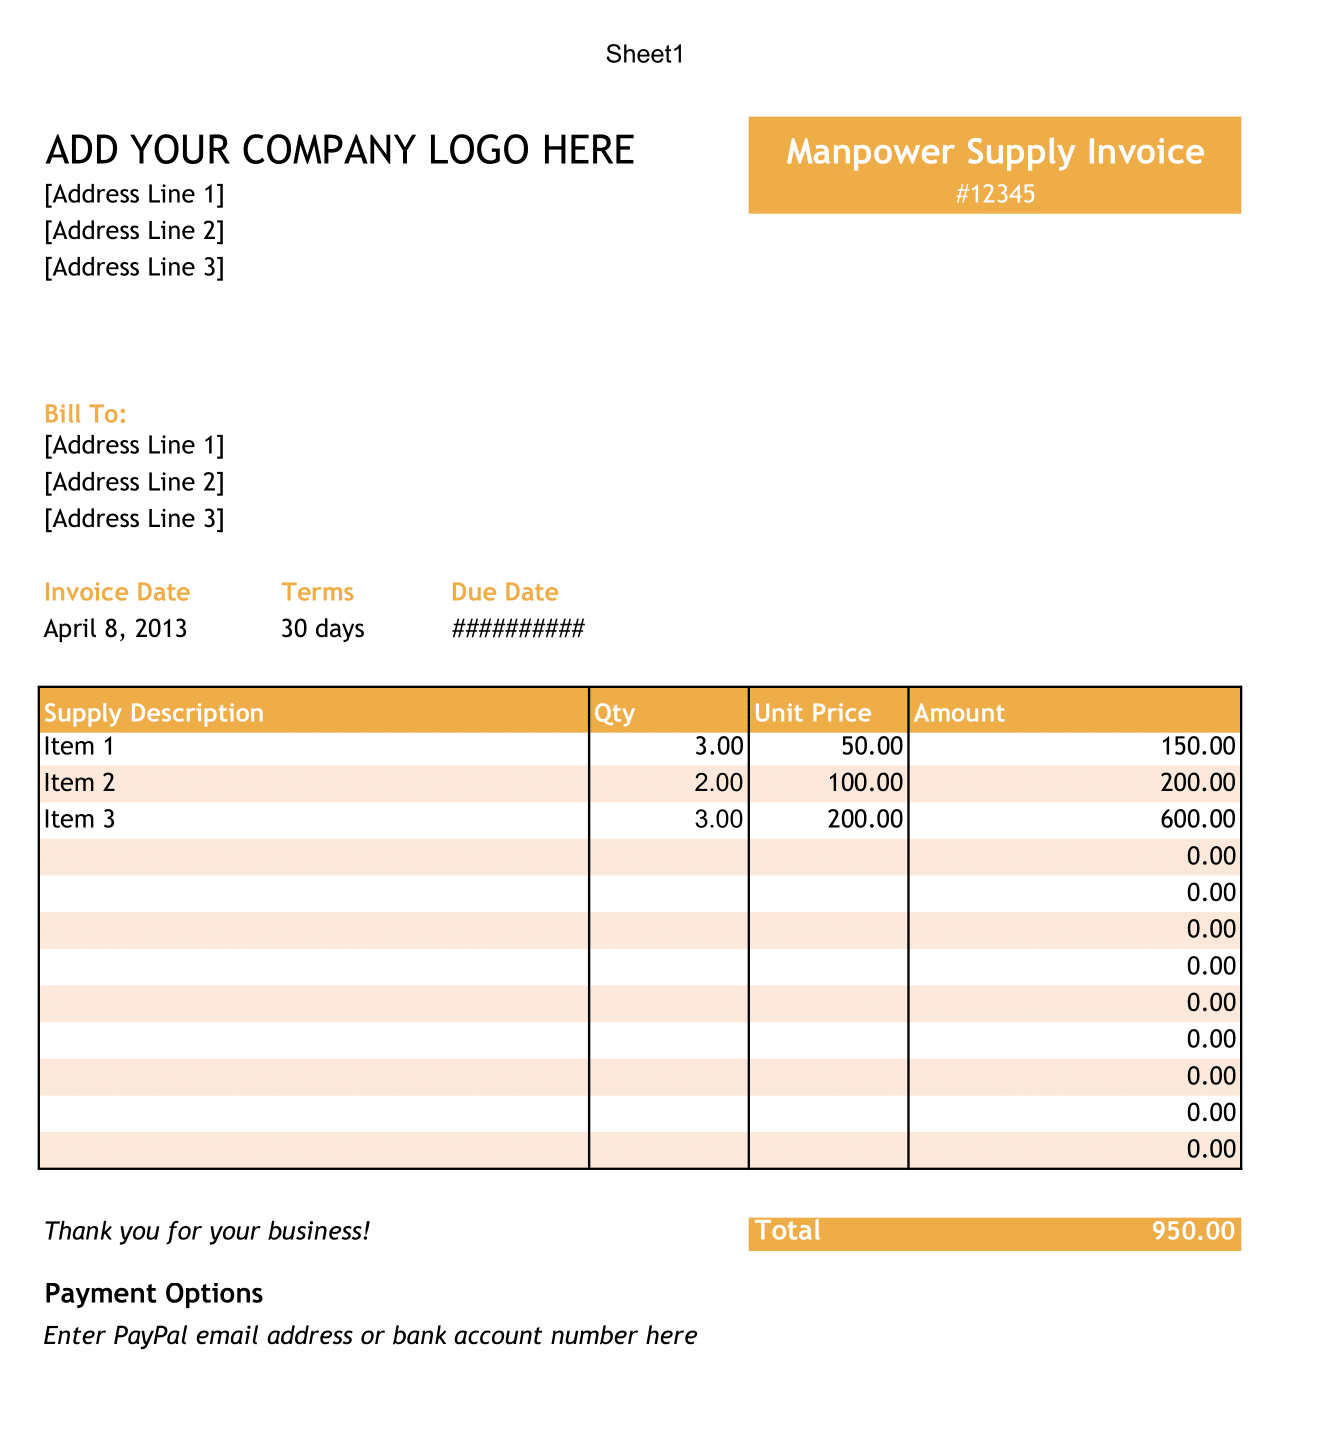 Manpower Supply Invoice Format